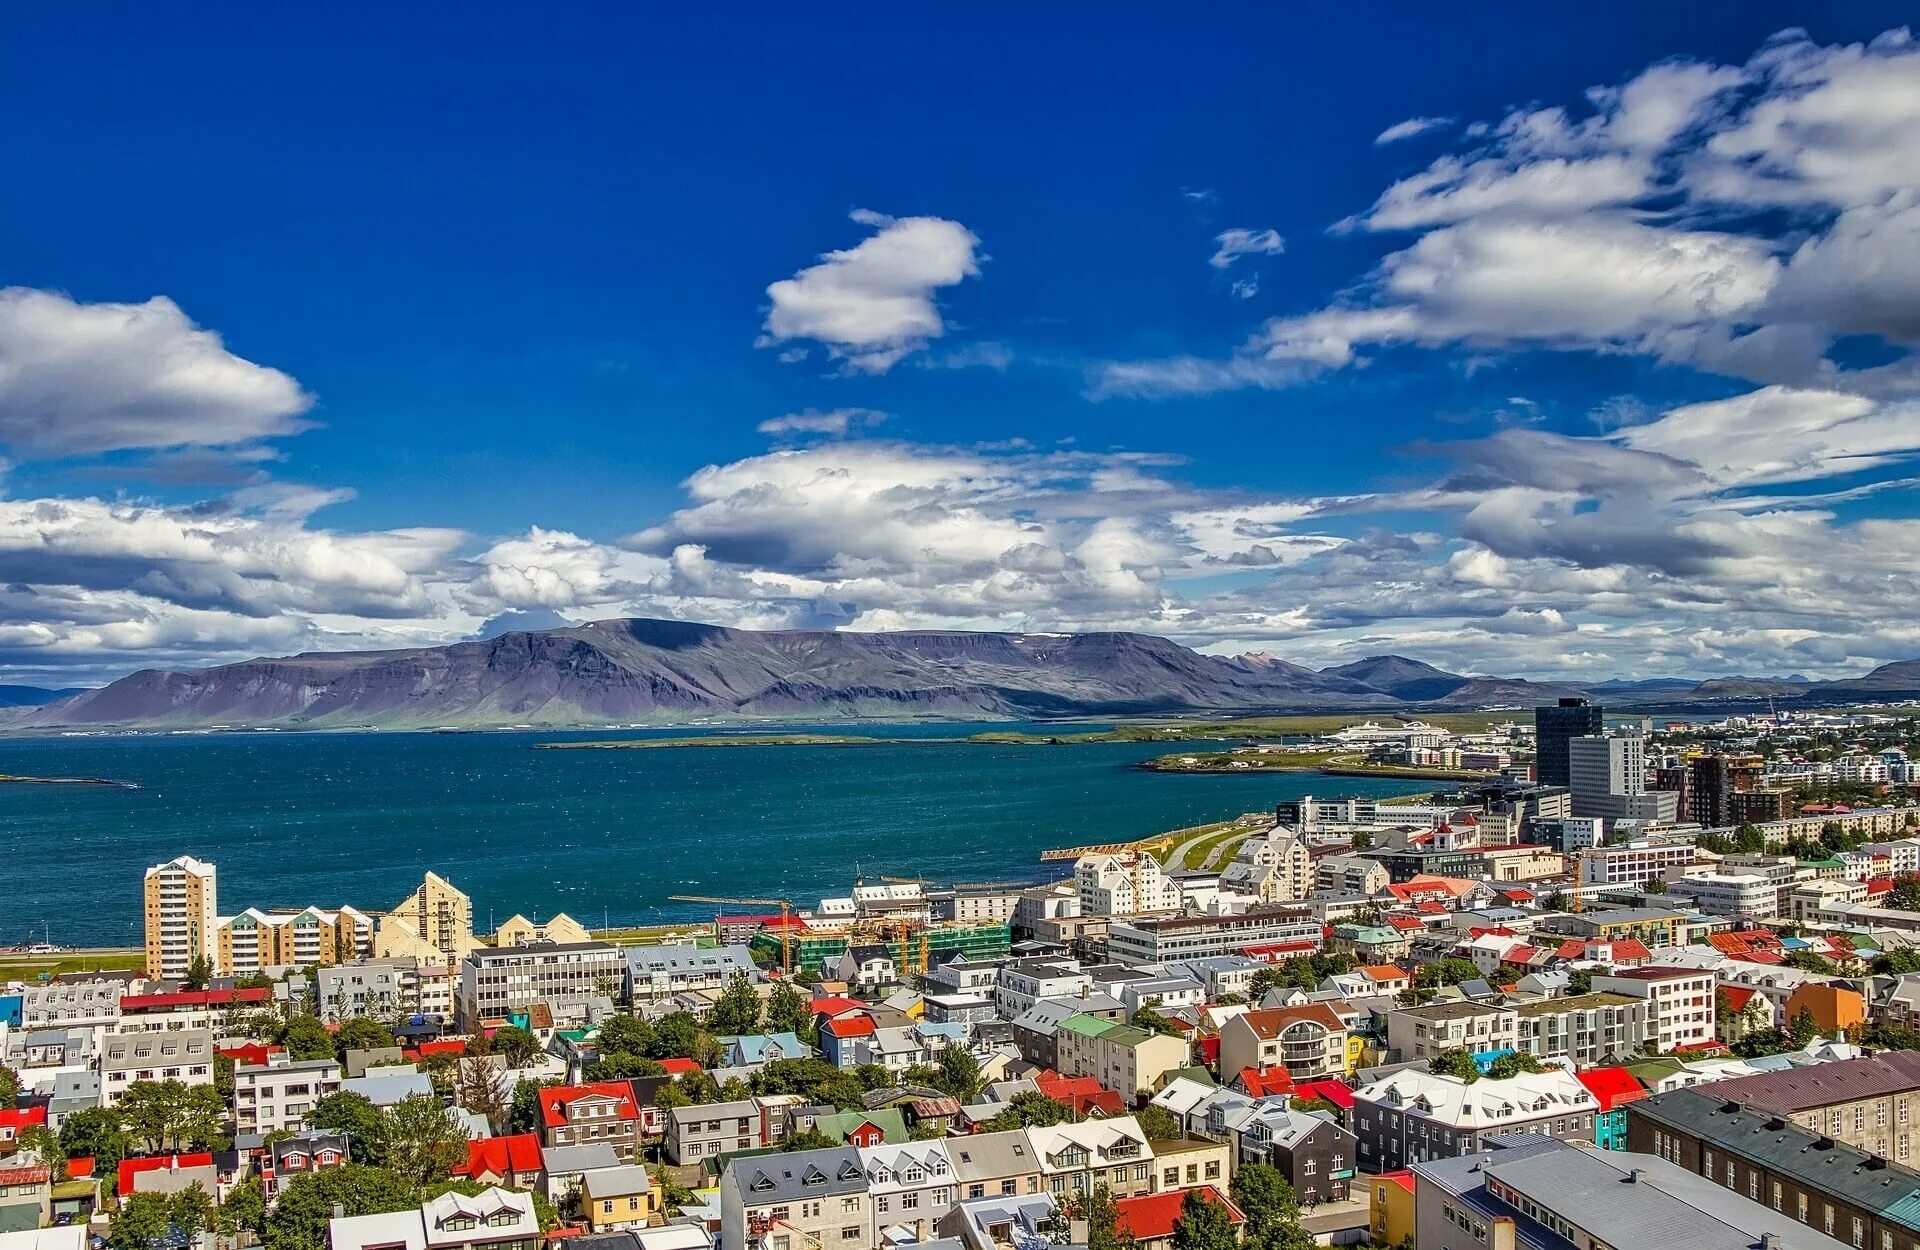 Island город. Исландия Рейкьявик. Исландия Рик Явик. Столица Исландии - город Рейкьявик. Монровия Рейкьявик.